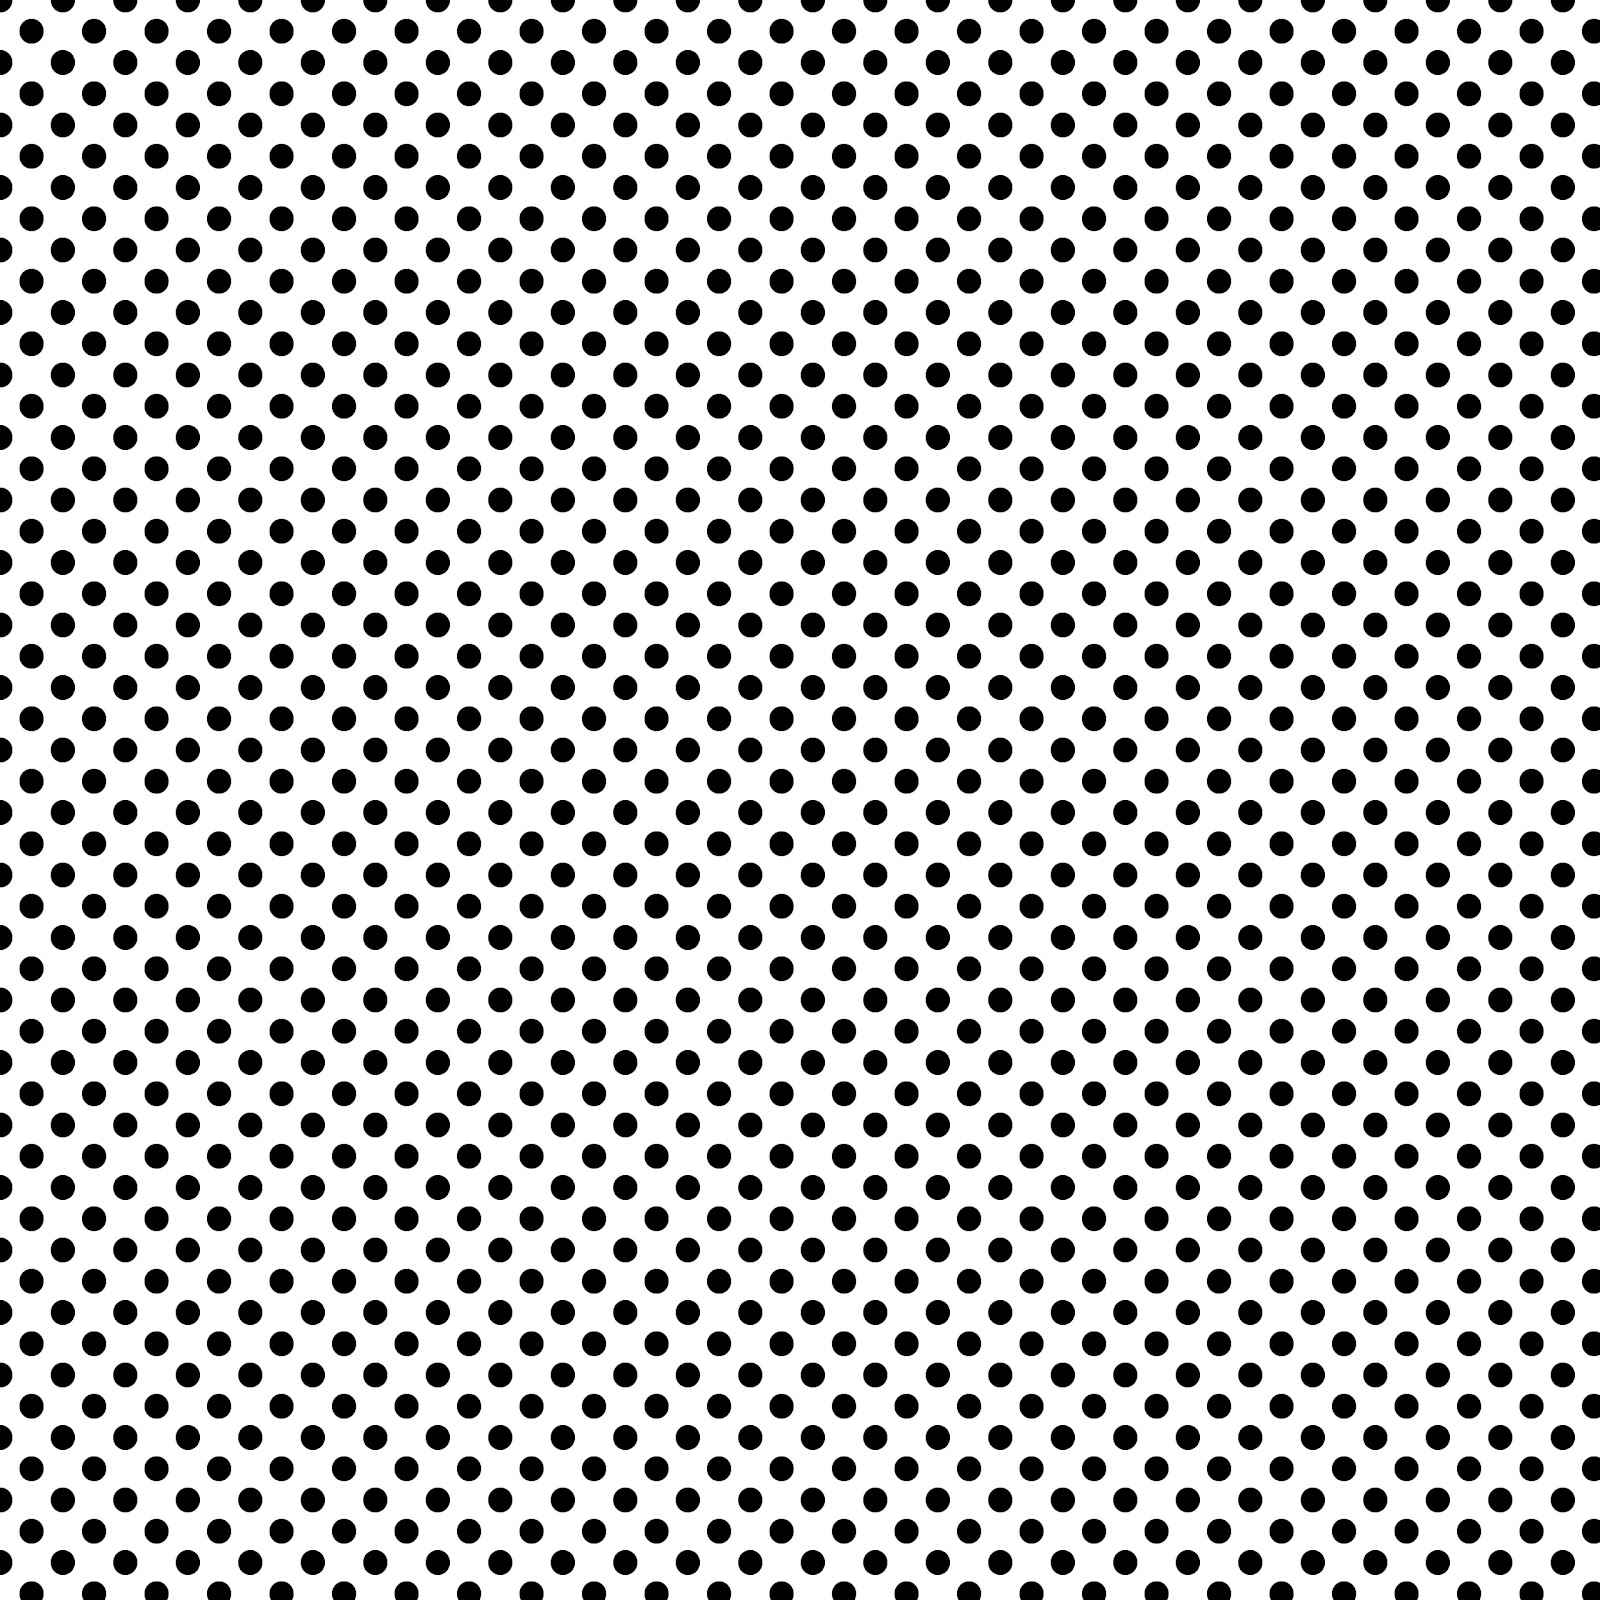 Polka Dot Black And White Wallpaper PicsWallpapercom 1600x1600